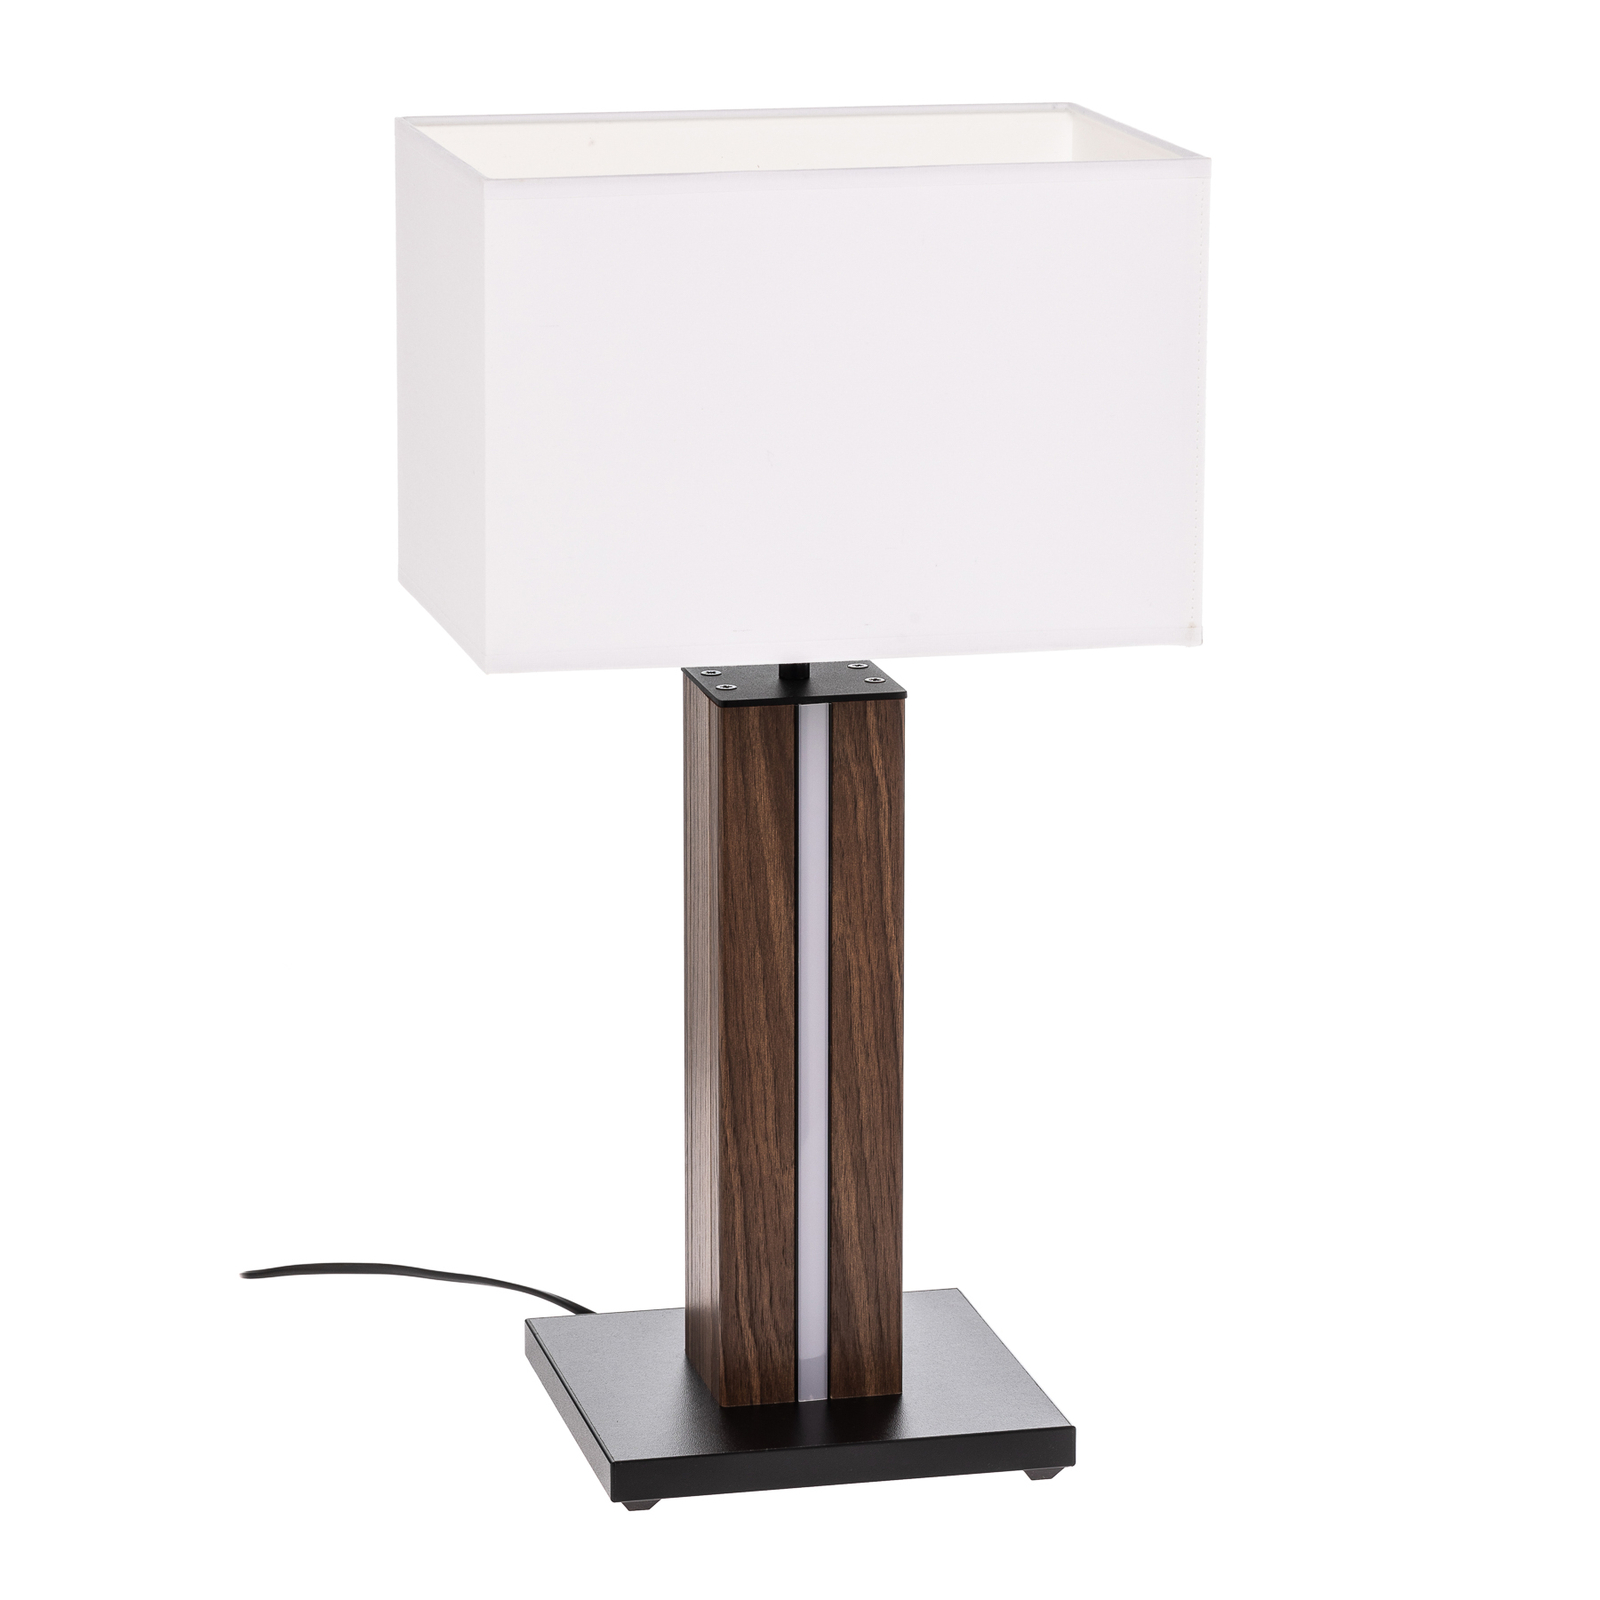 Elegance table lamp dimmable, walnut veneer white